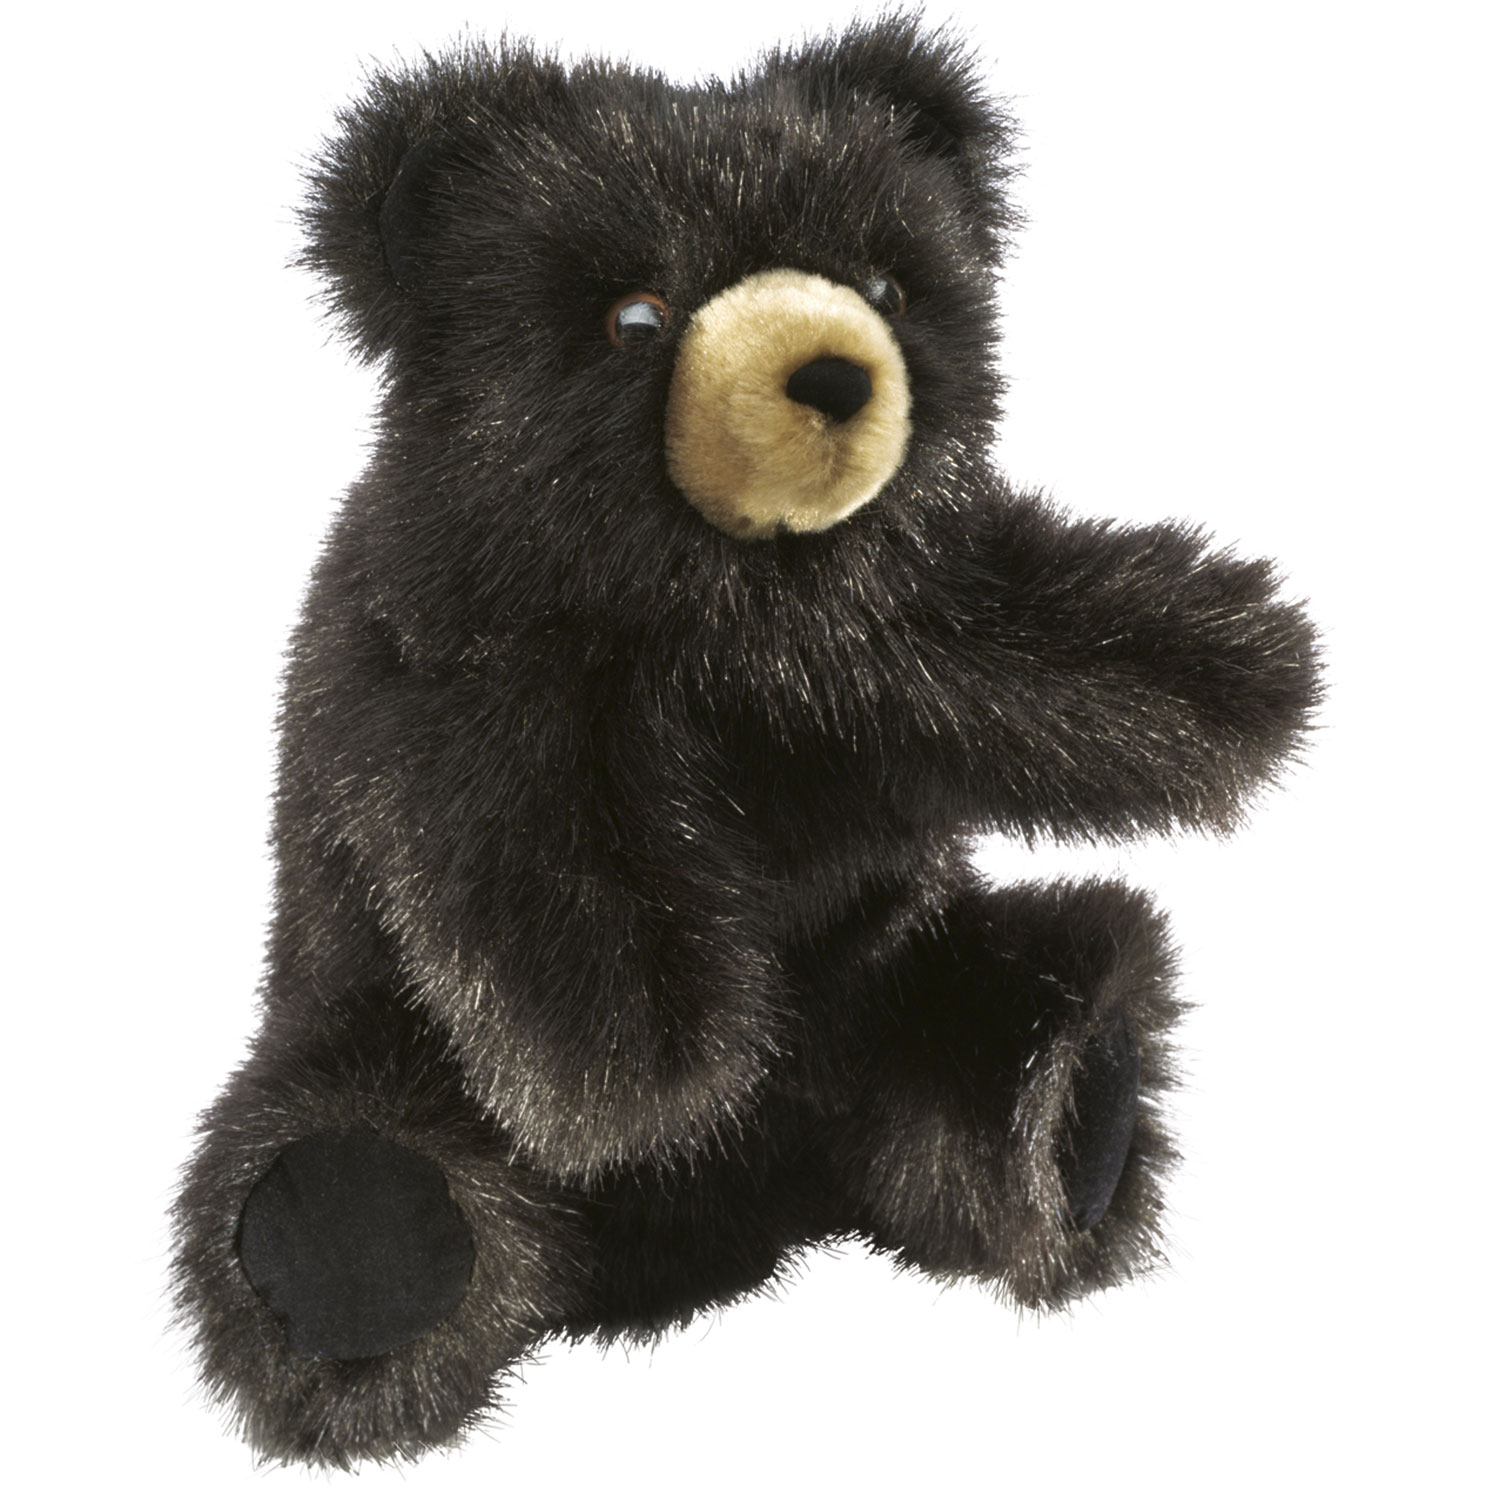 Kleiner dunkelbrauner Bär / Baby Black Bear